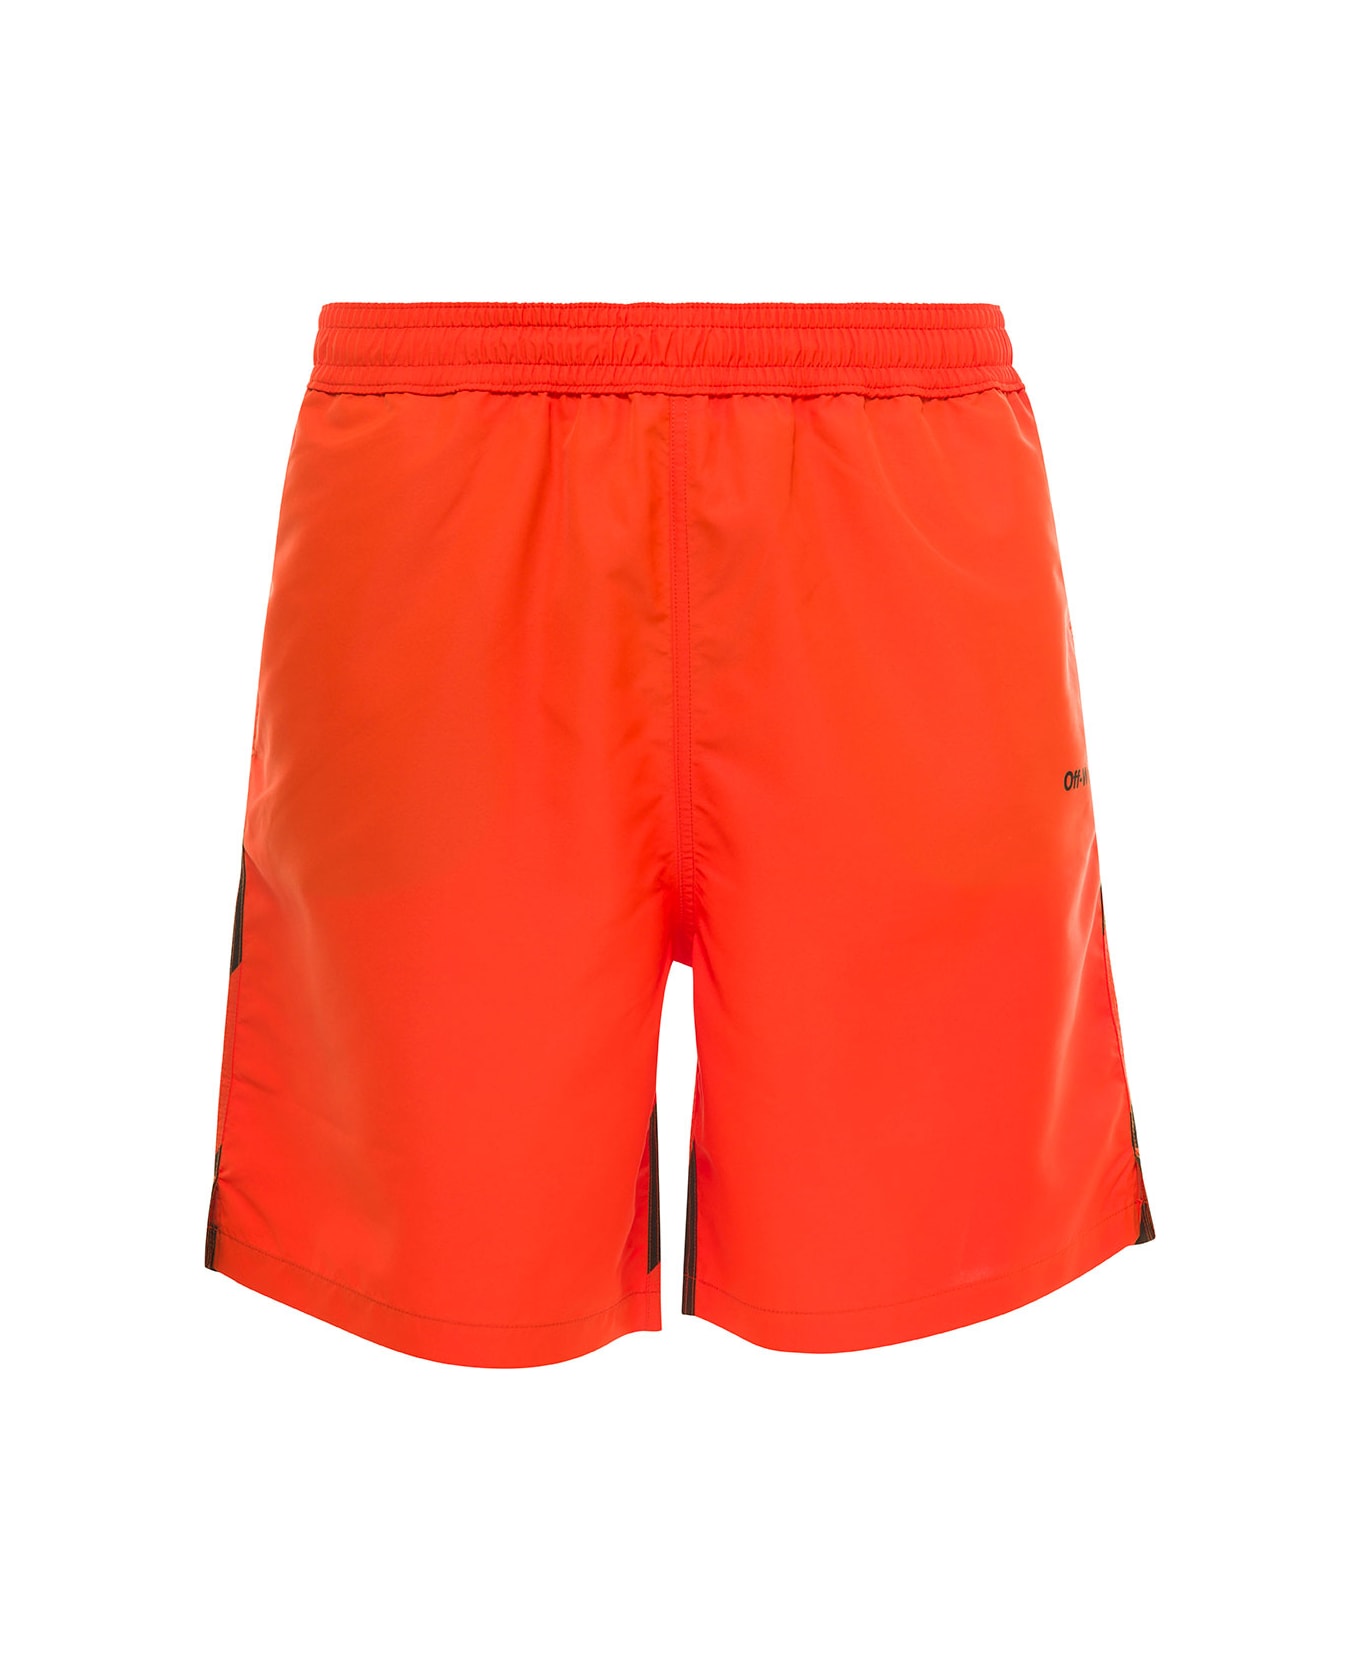 Off-White Orange Swim Trunks With Diag Print At The Back In Polyester Man - Orange 水着